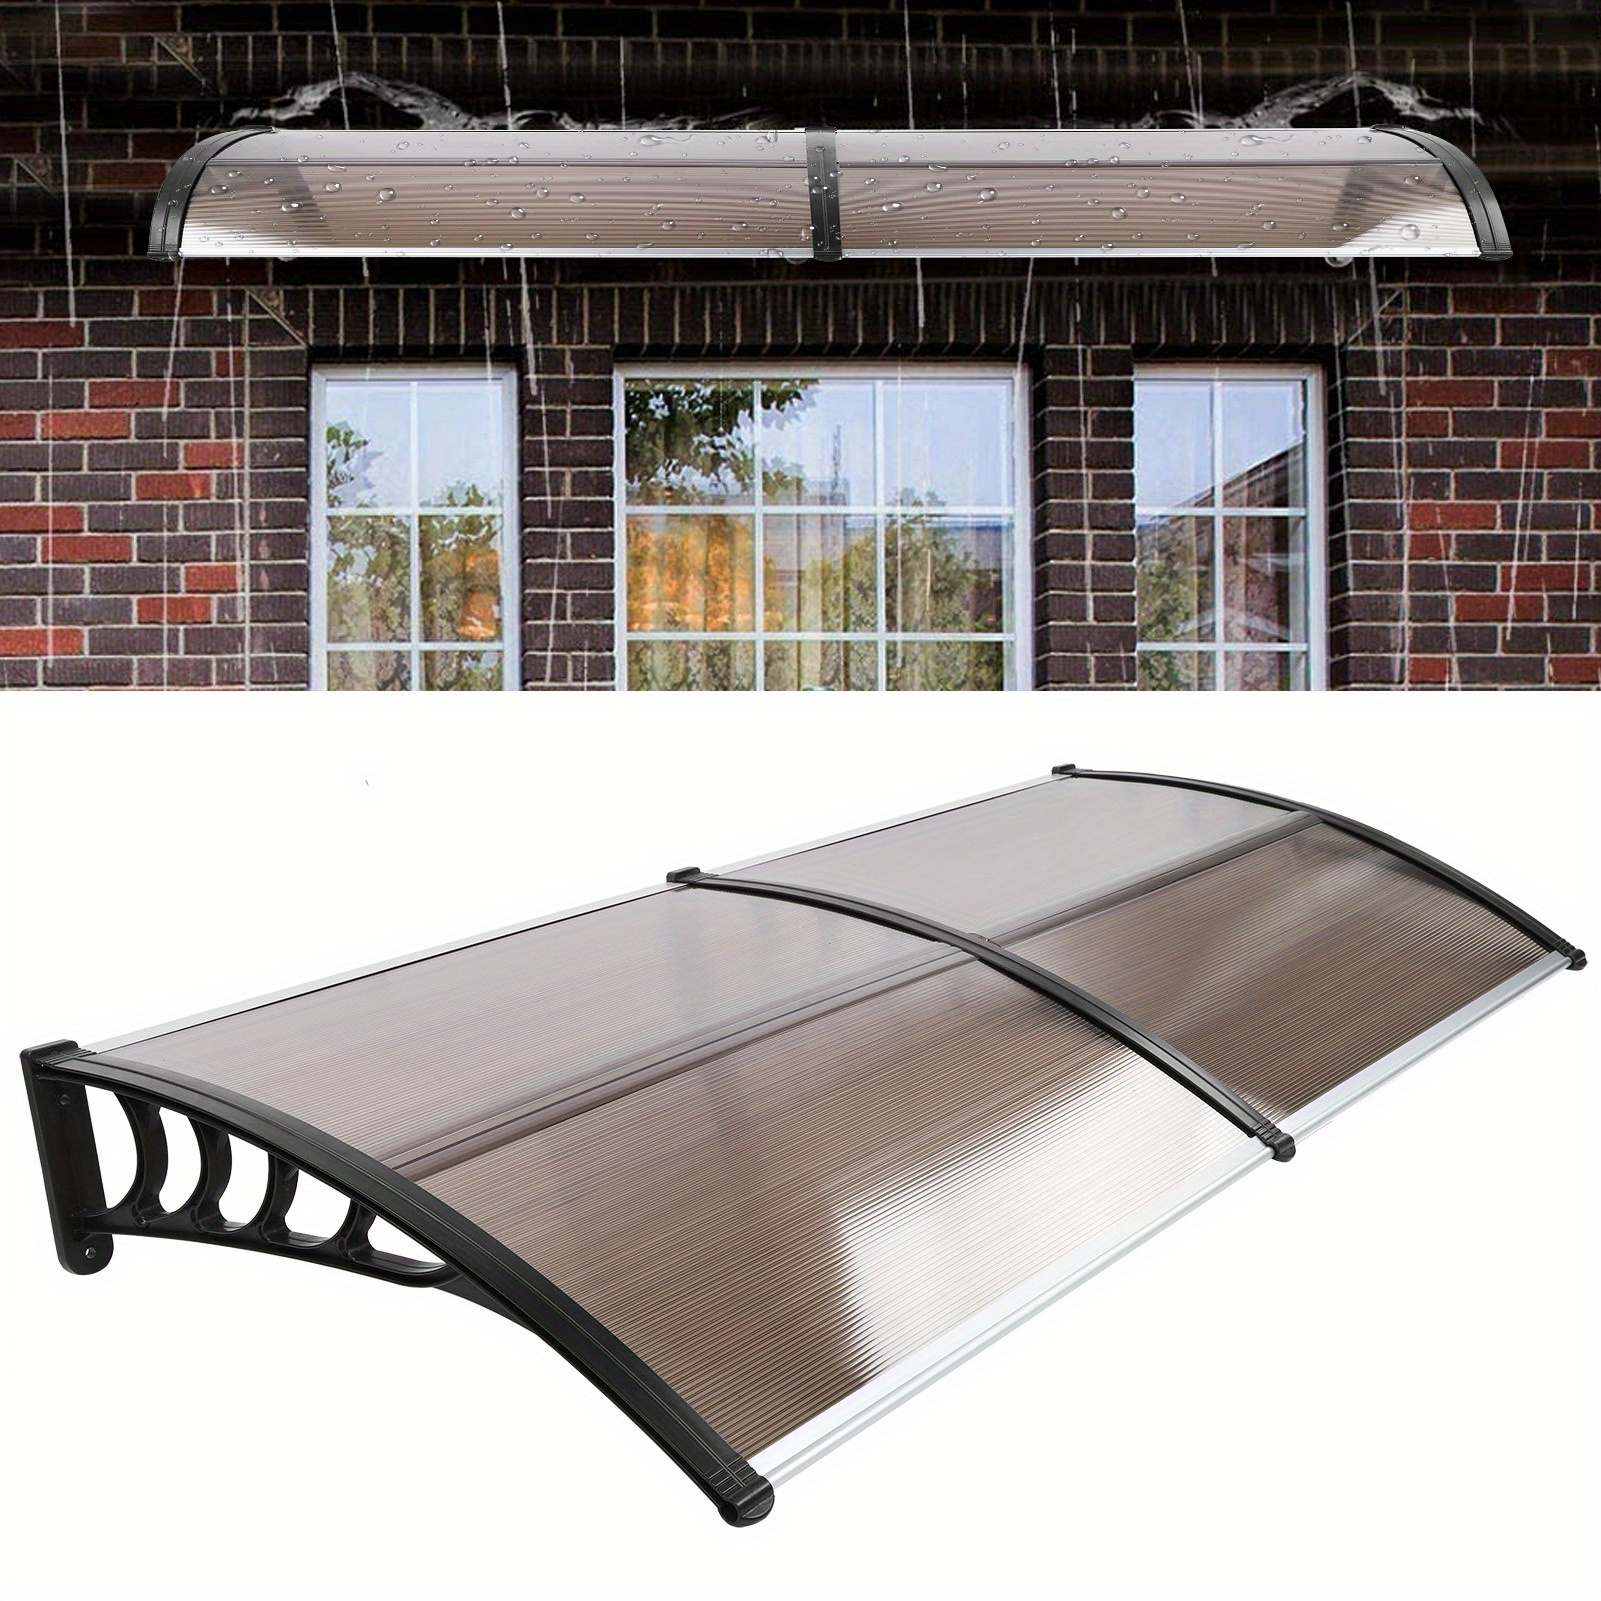 

79*40in Outdoor Door Window Sunshade Awning Canopy For Coutyard Garden House